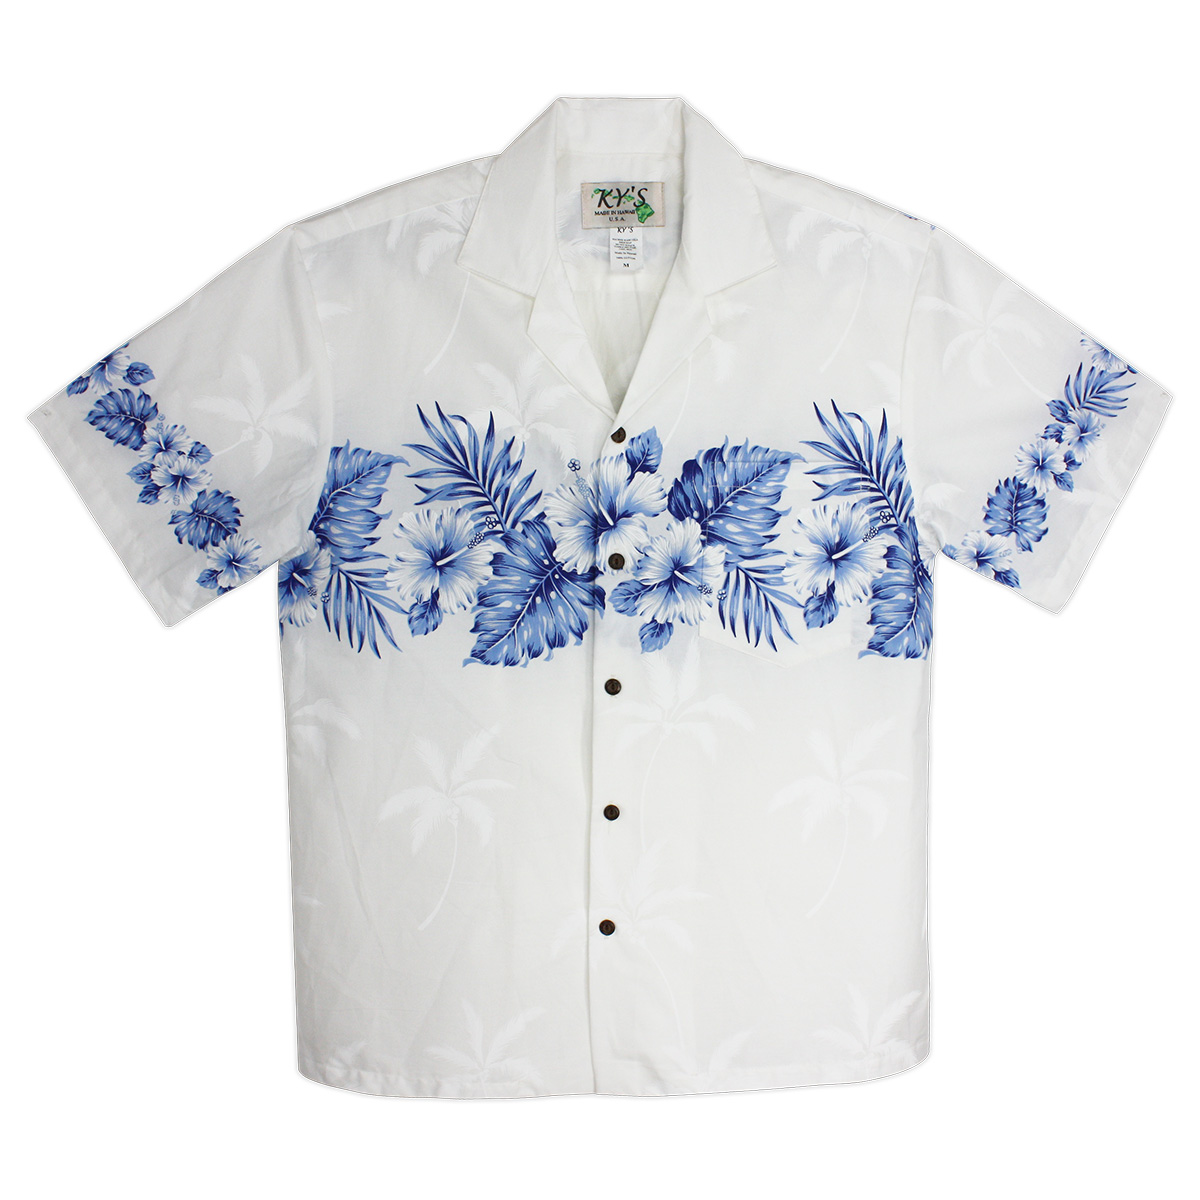 Mens Hawaiian Shirt – Caribbean Retreat – White with Royal Blue Chestband Print